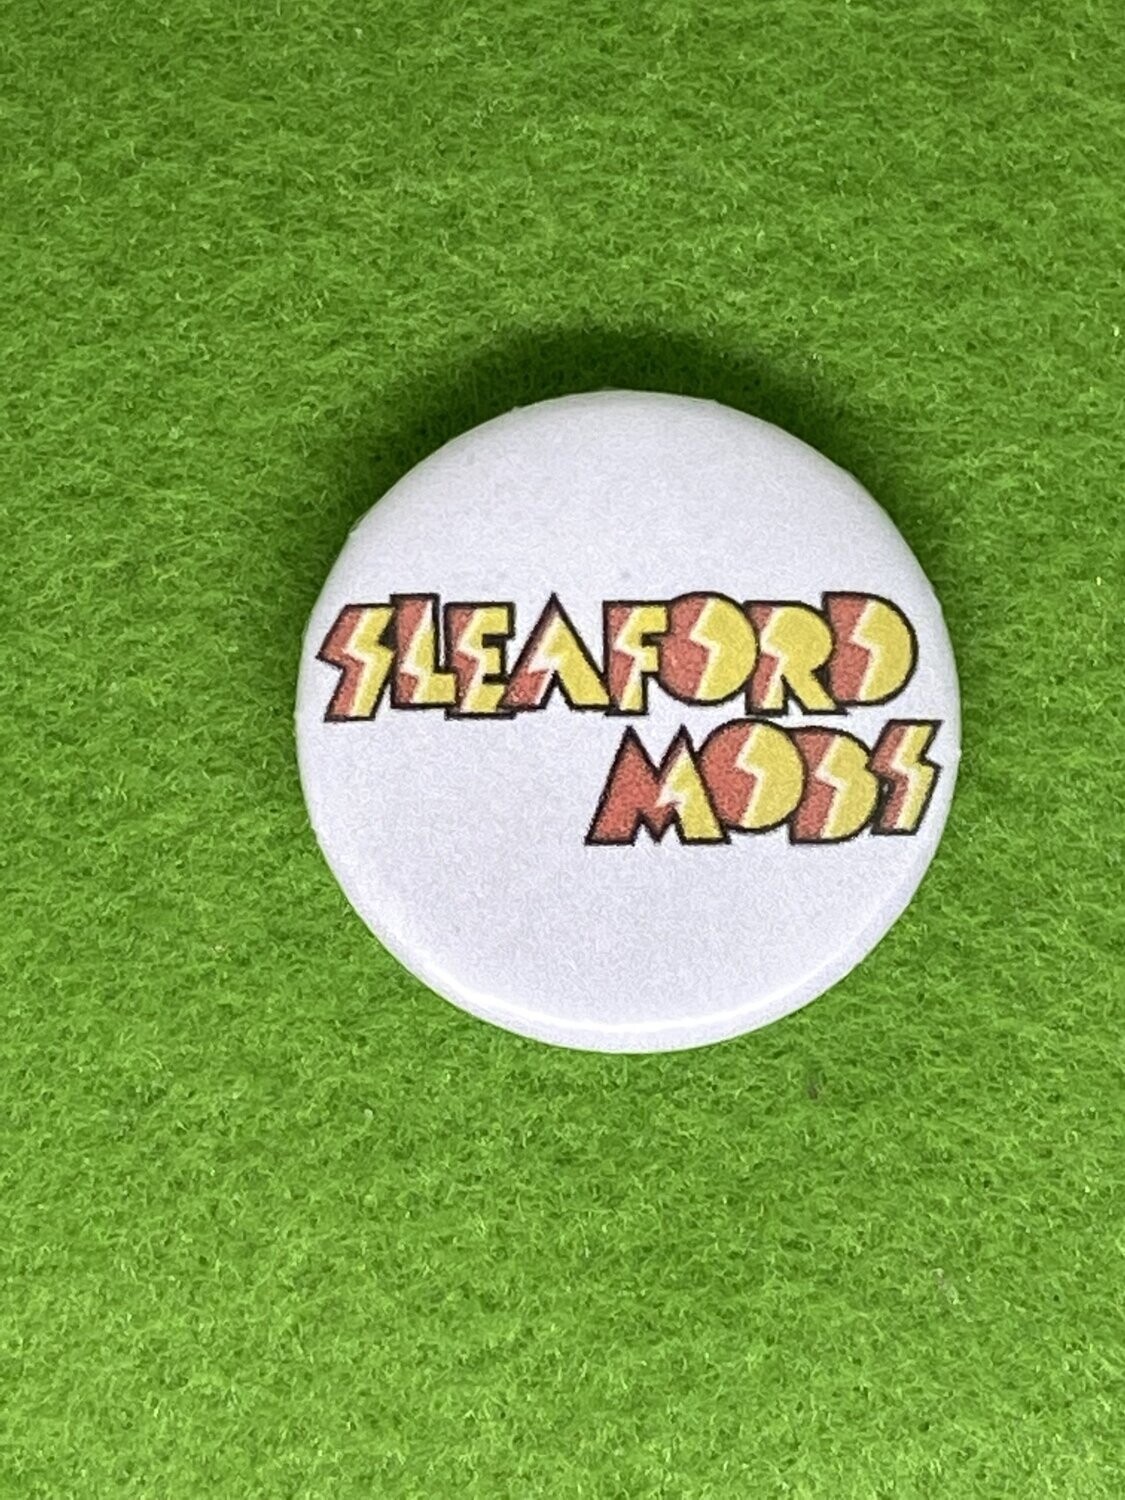 Sleaford Mods Badge